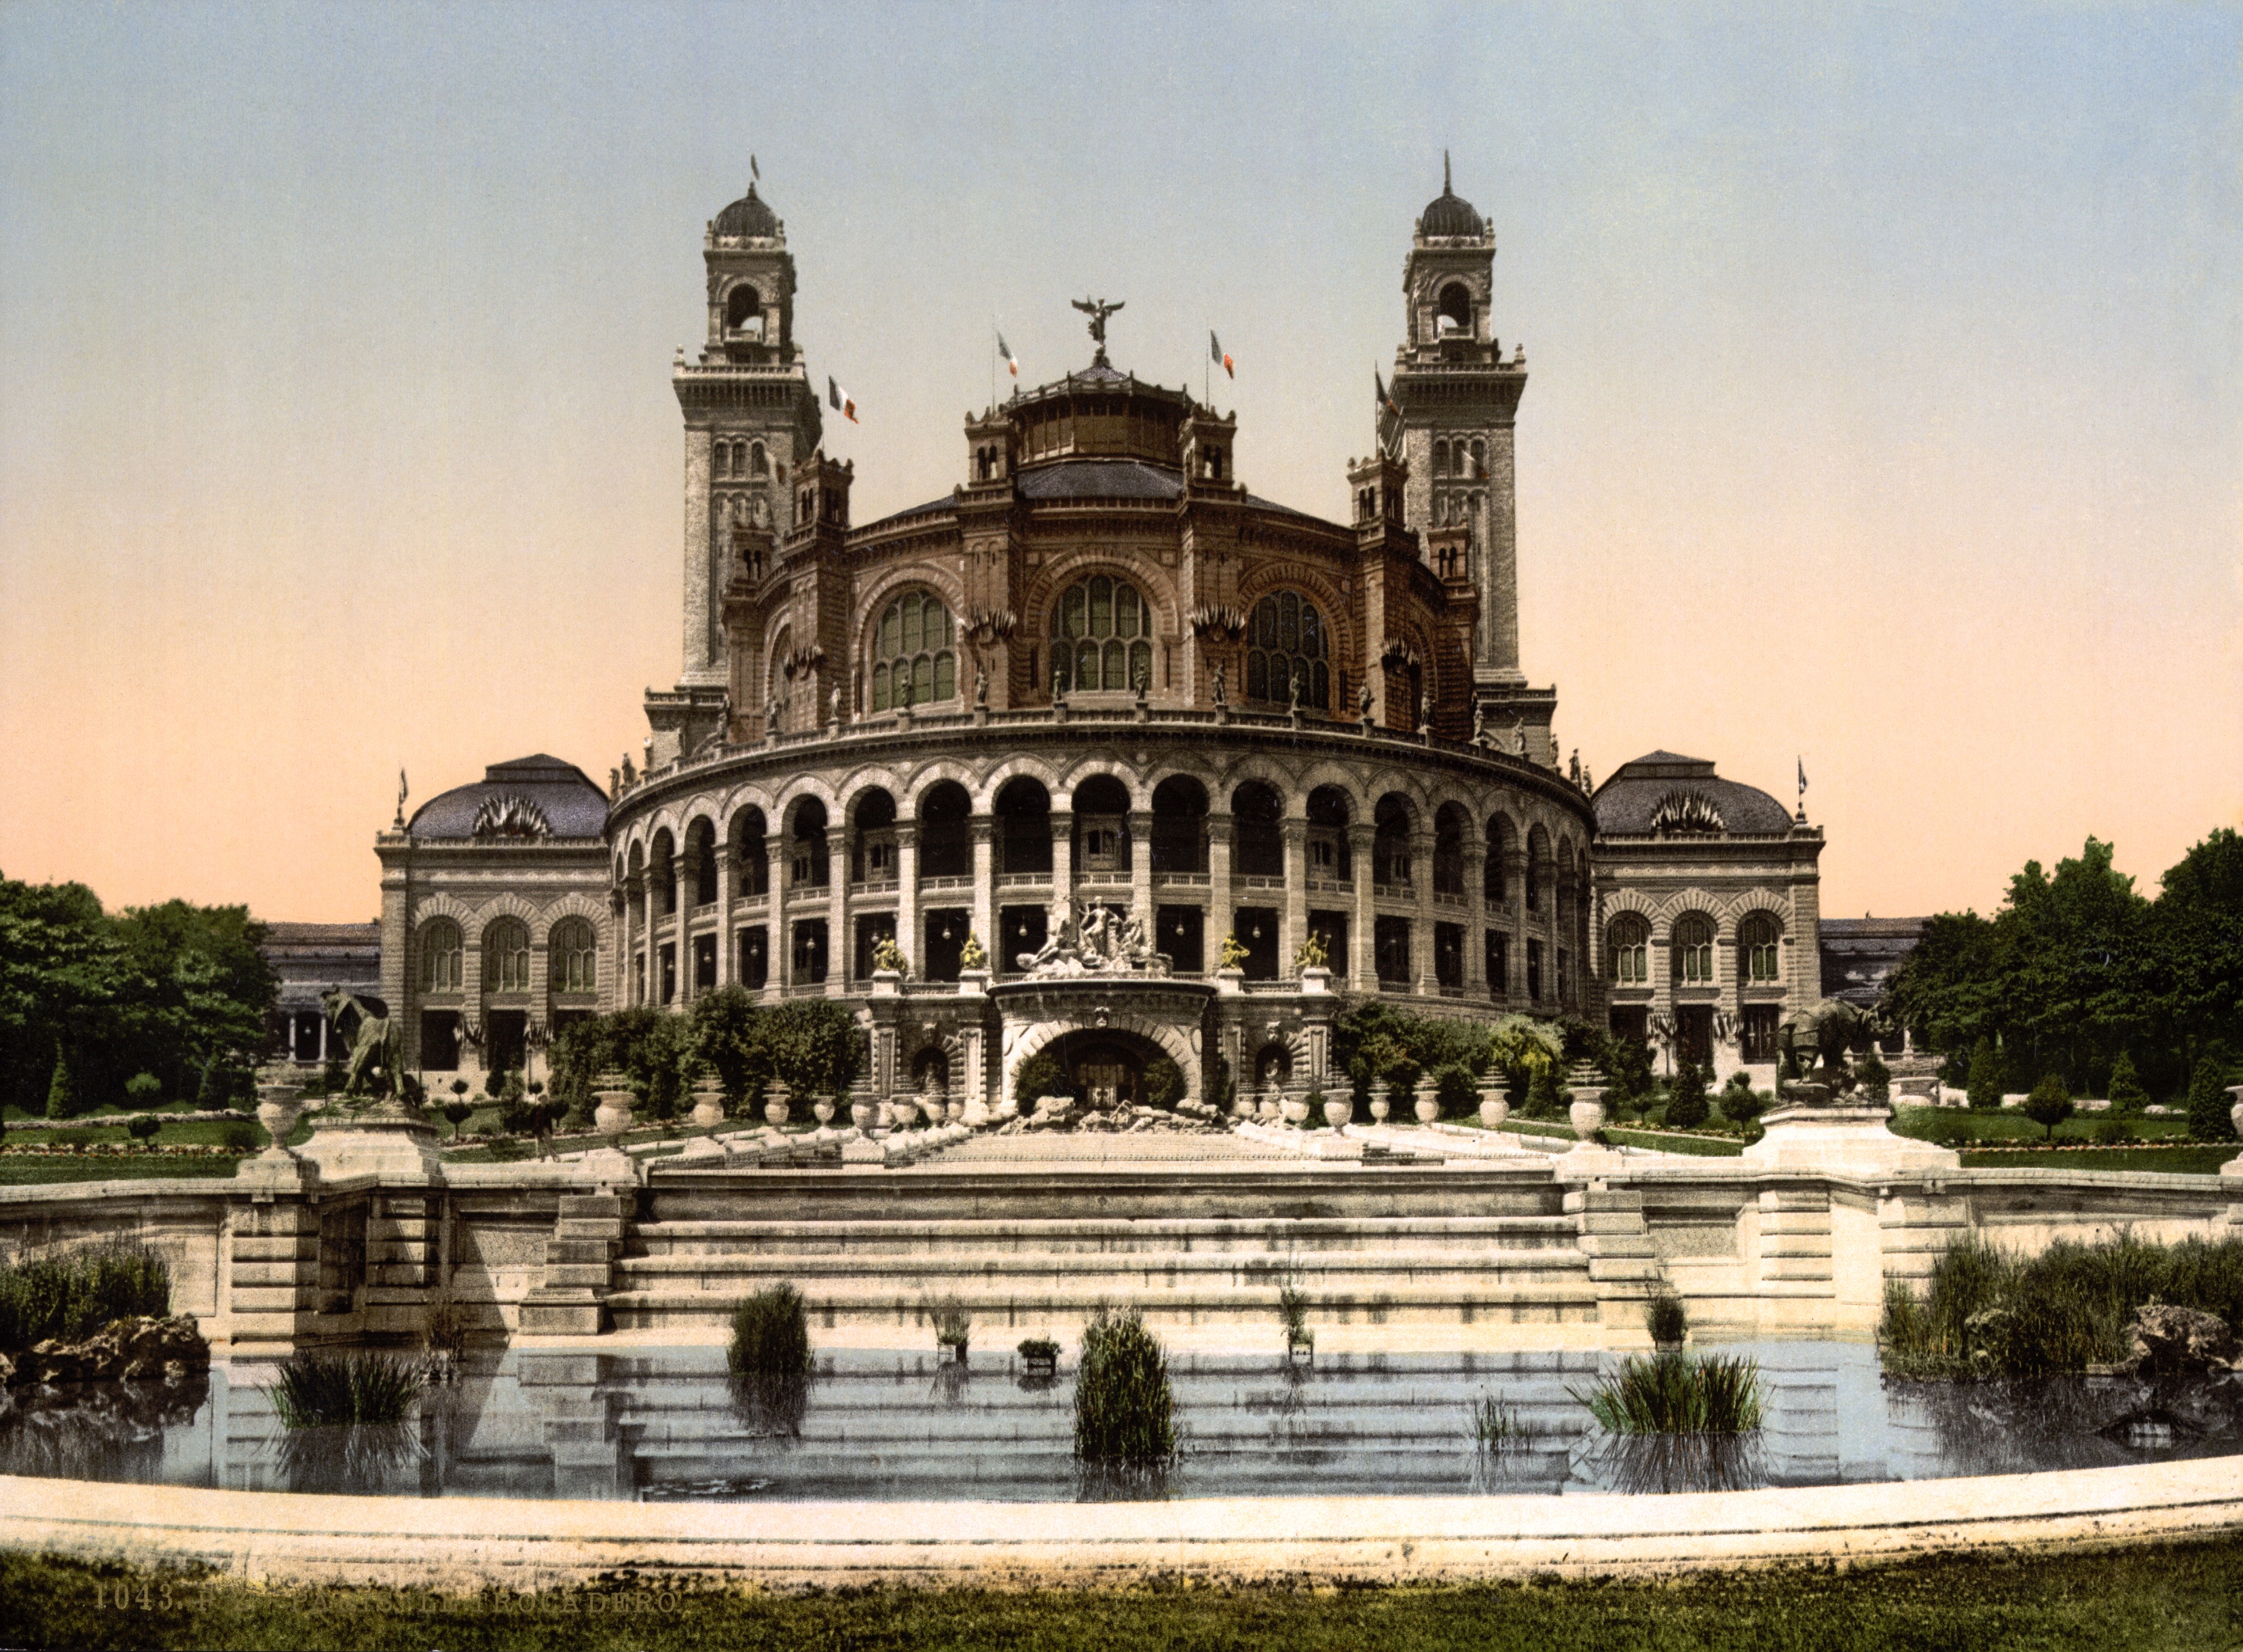 http://upload.wikimedia.org/wikipedia/commons/7/70/The_Trocadero,_Exposition_Universal,_1900,_Paris,_France.jpg